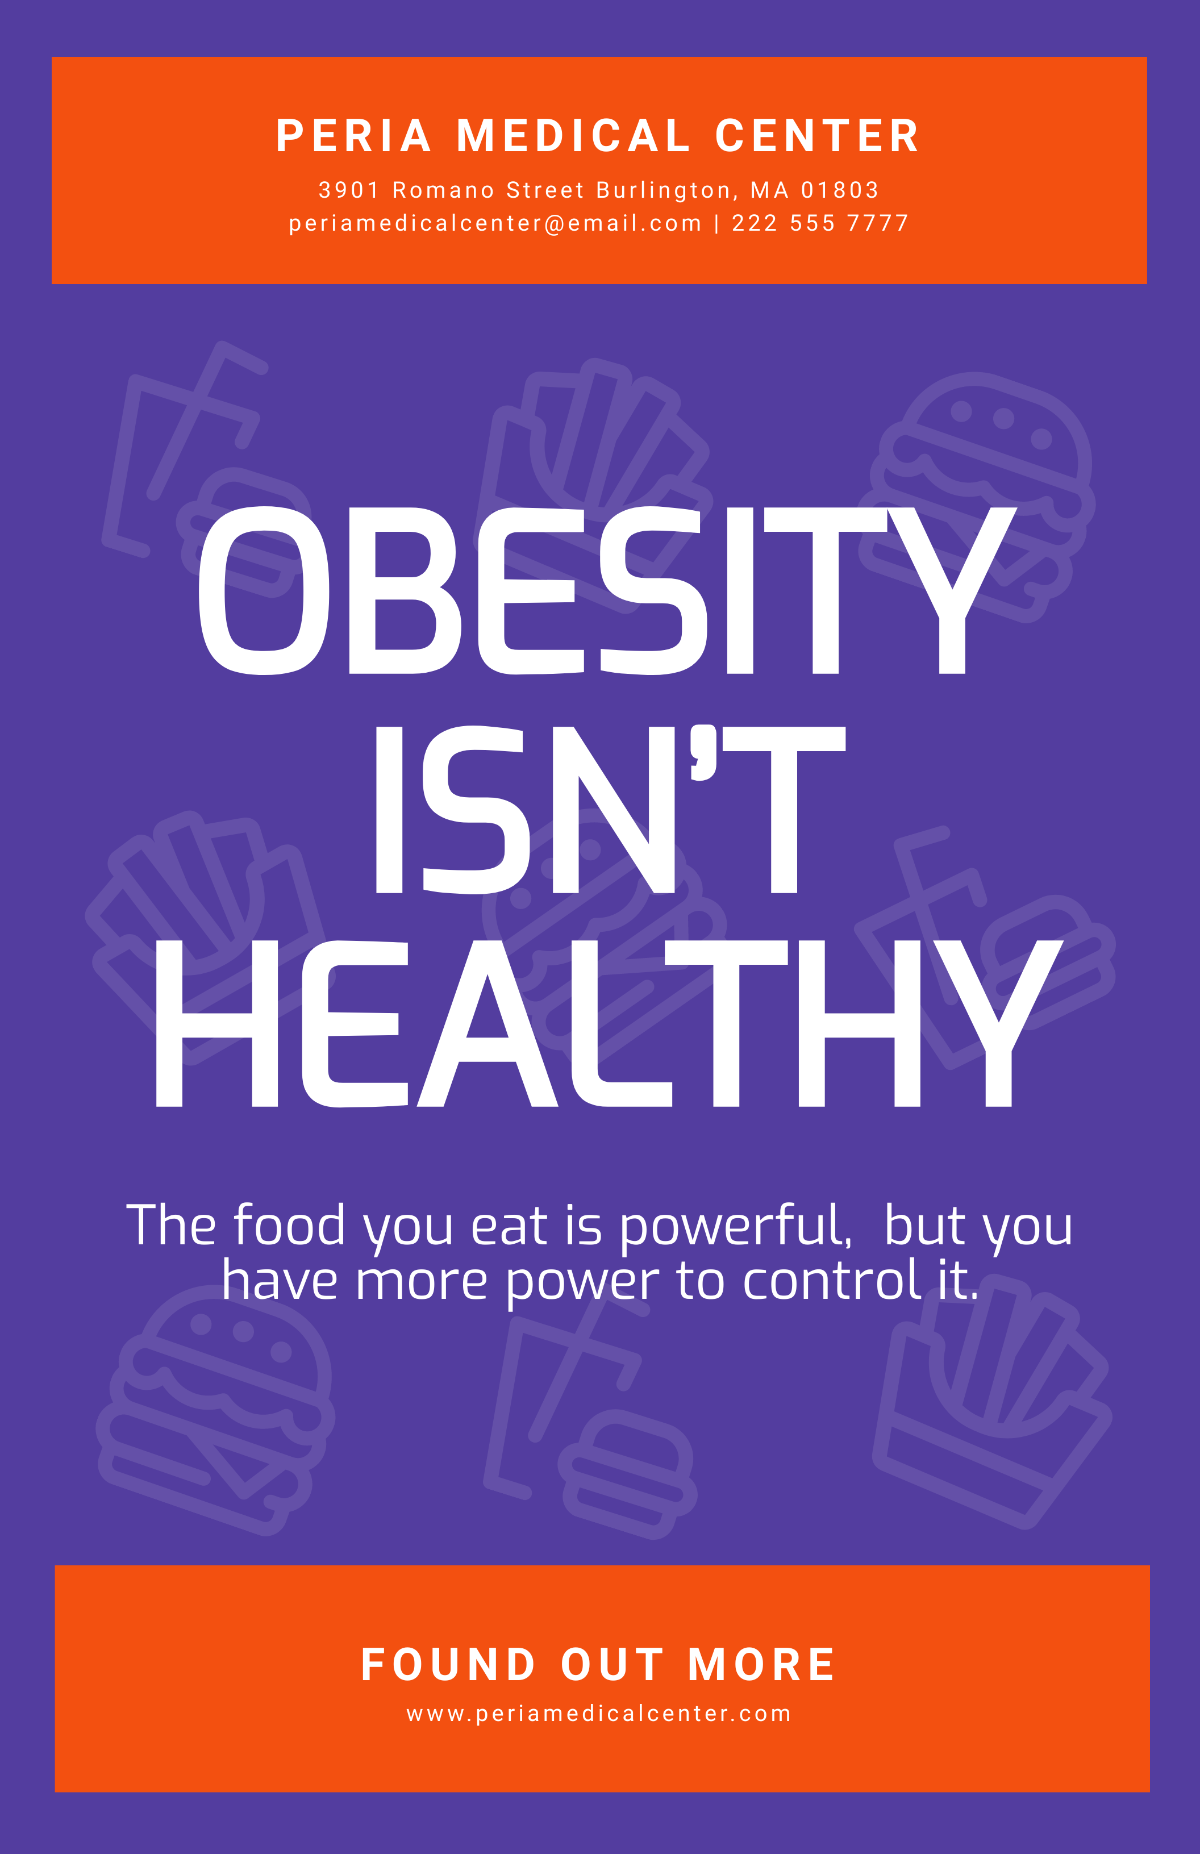 Free Obesity Awareness Poster Template